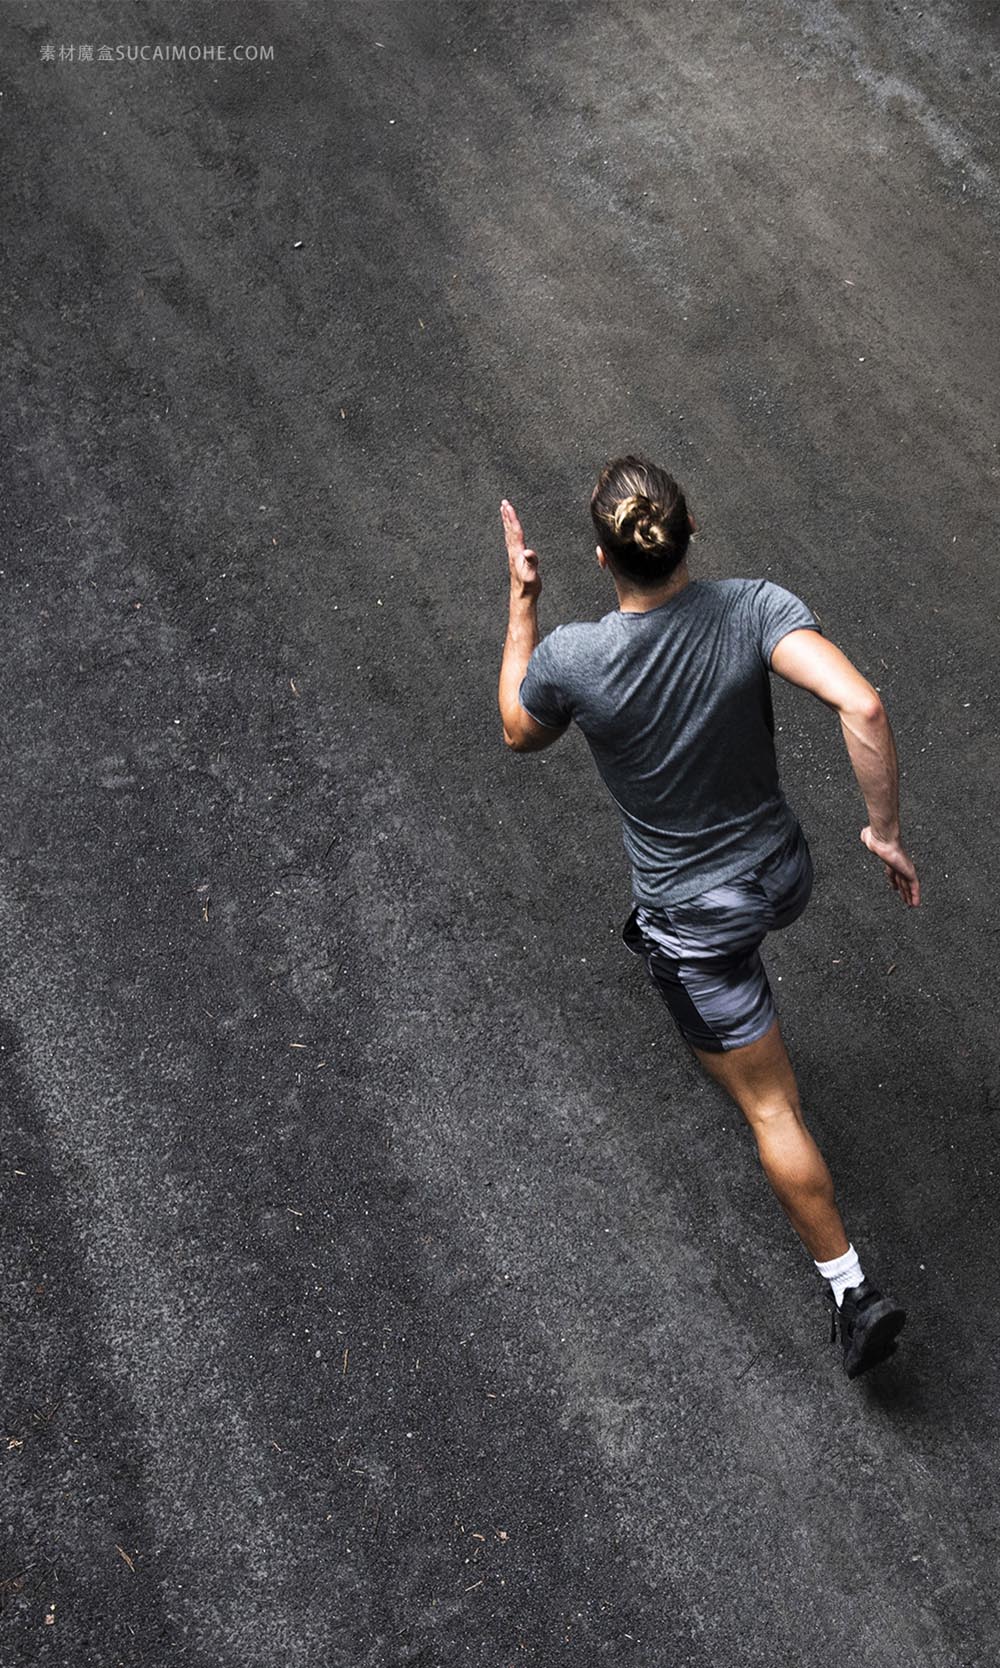 running-运行 体育 竞赛 运动员 大厅 速度 身体素质 男人 高清大图 清晨 阳光 高山 长发 金发